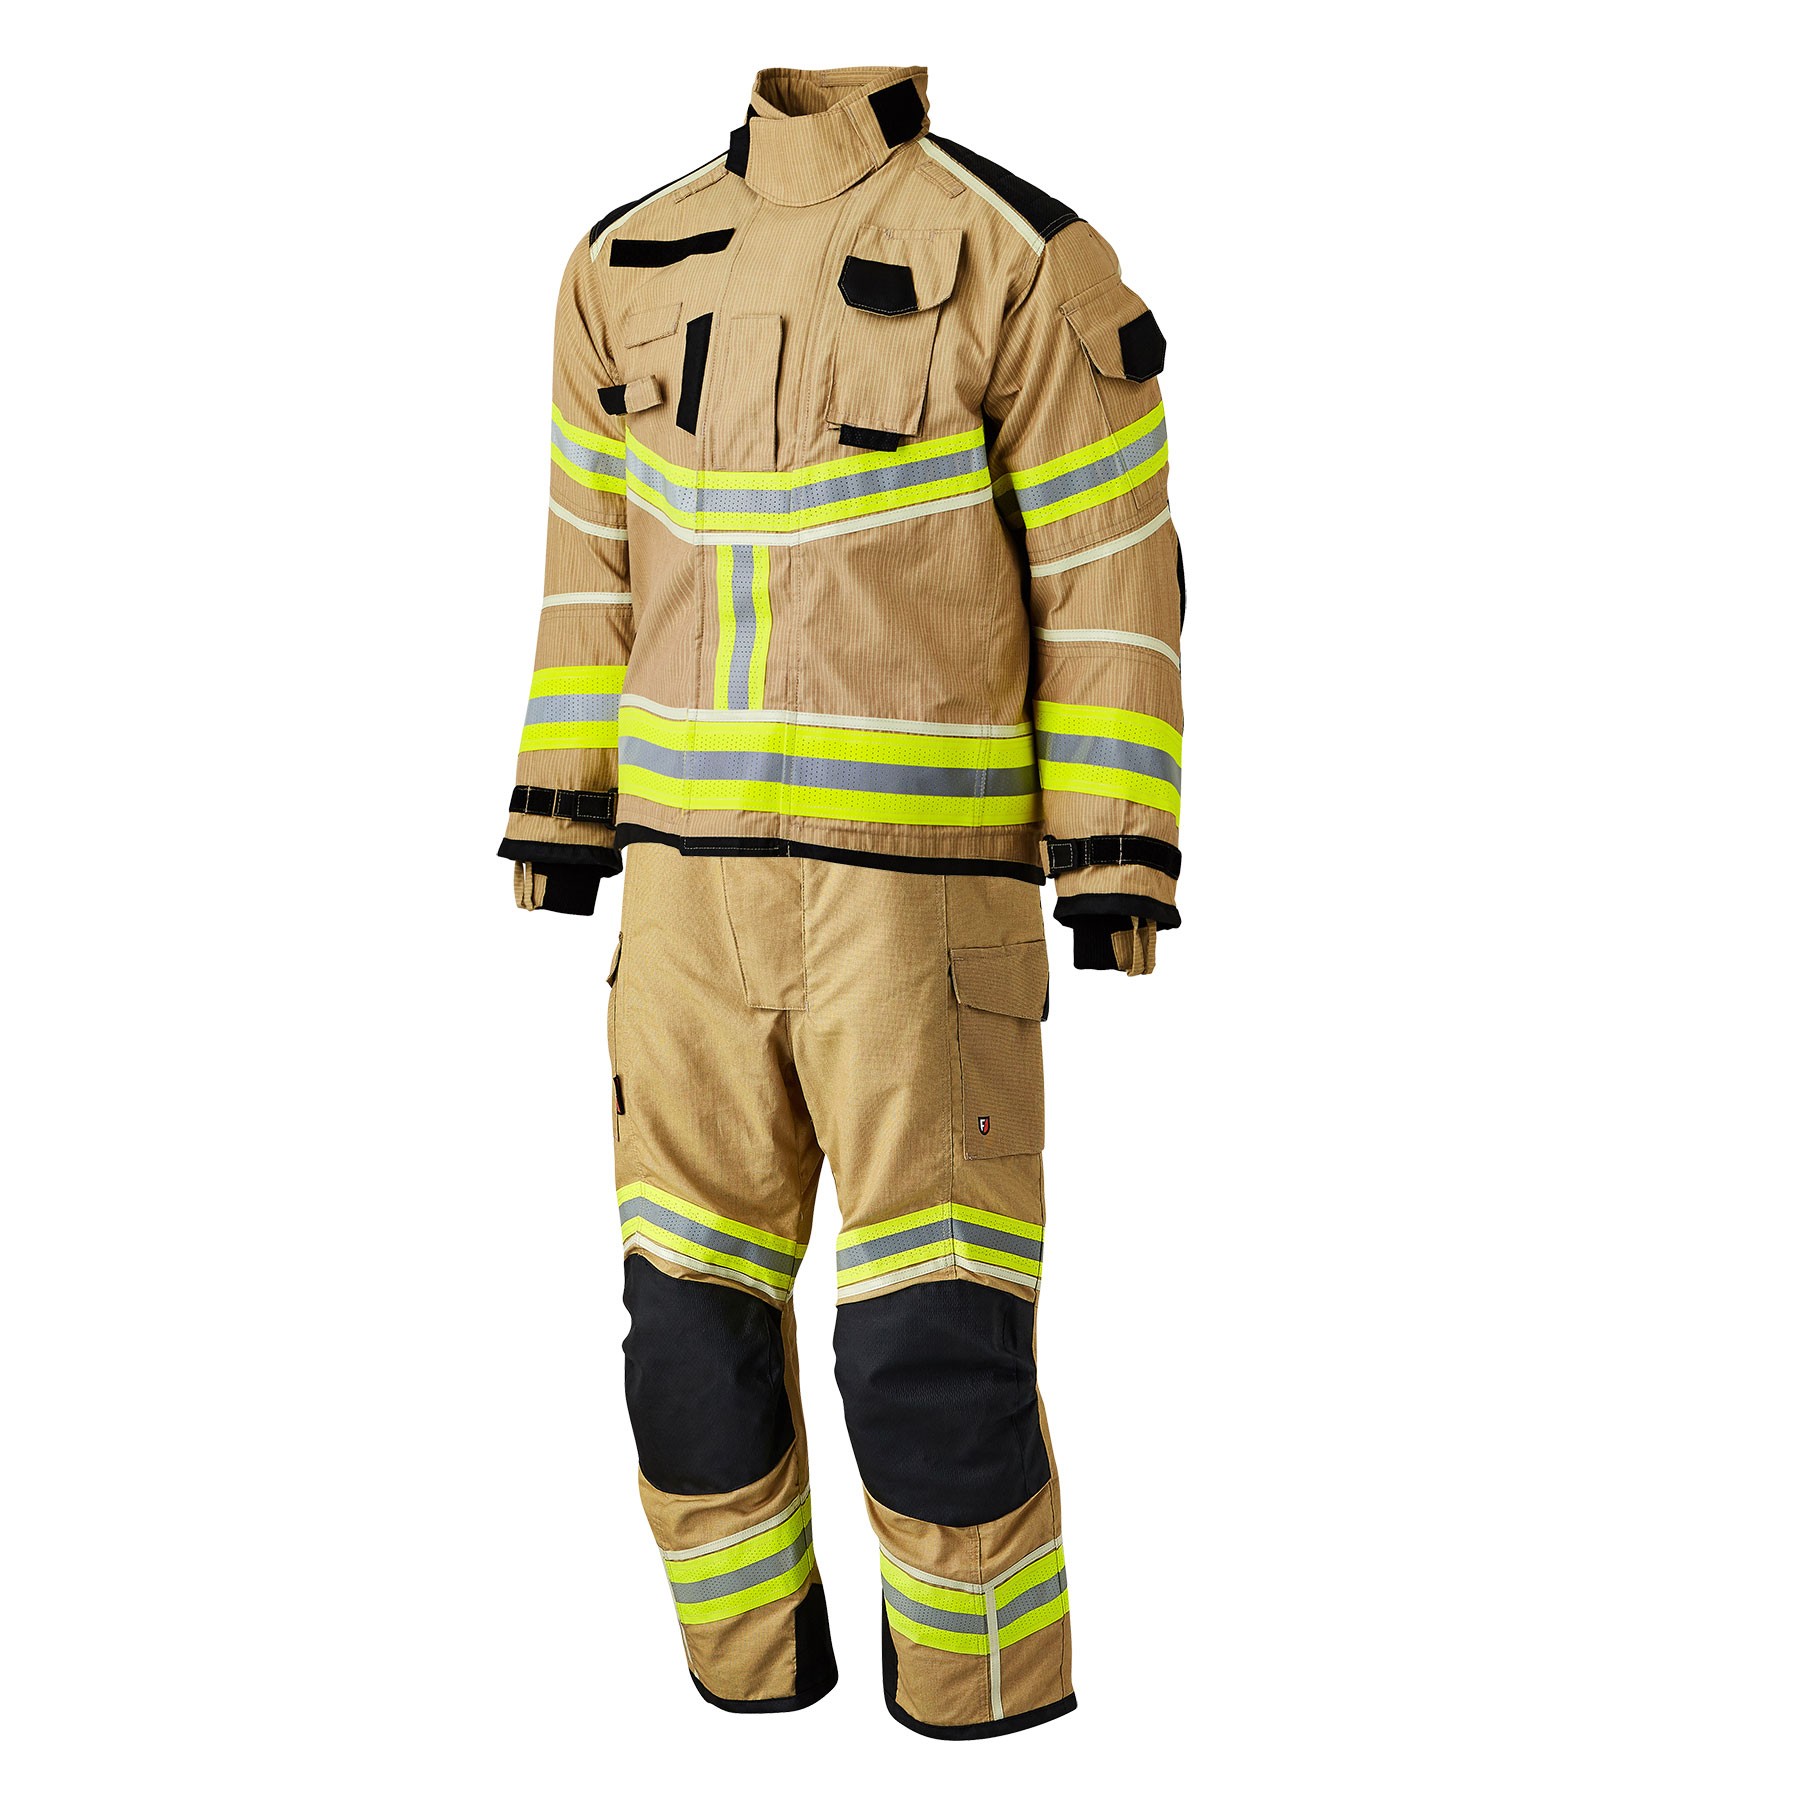 770/775 Valiant Firefighter Suit